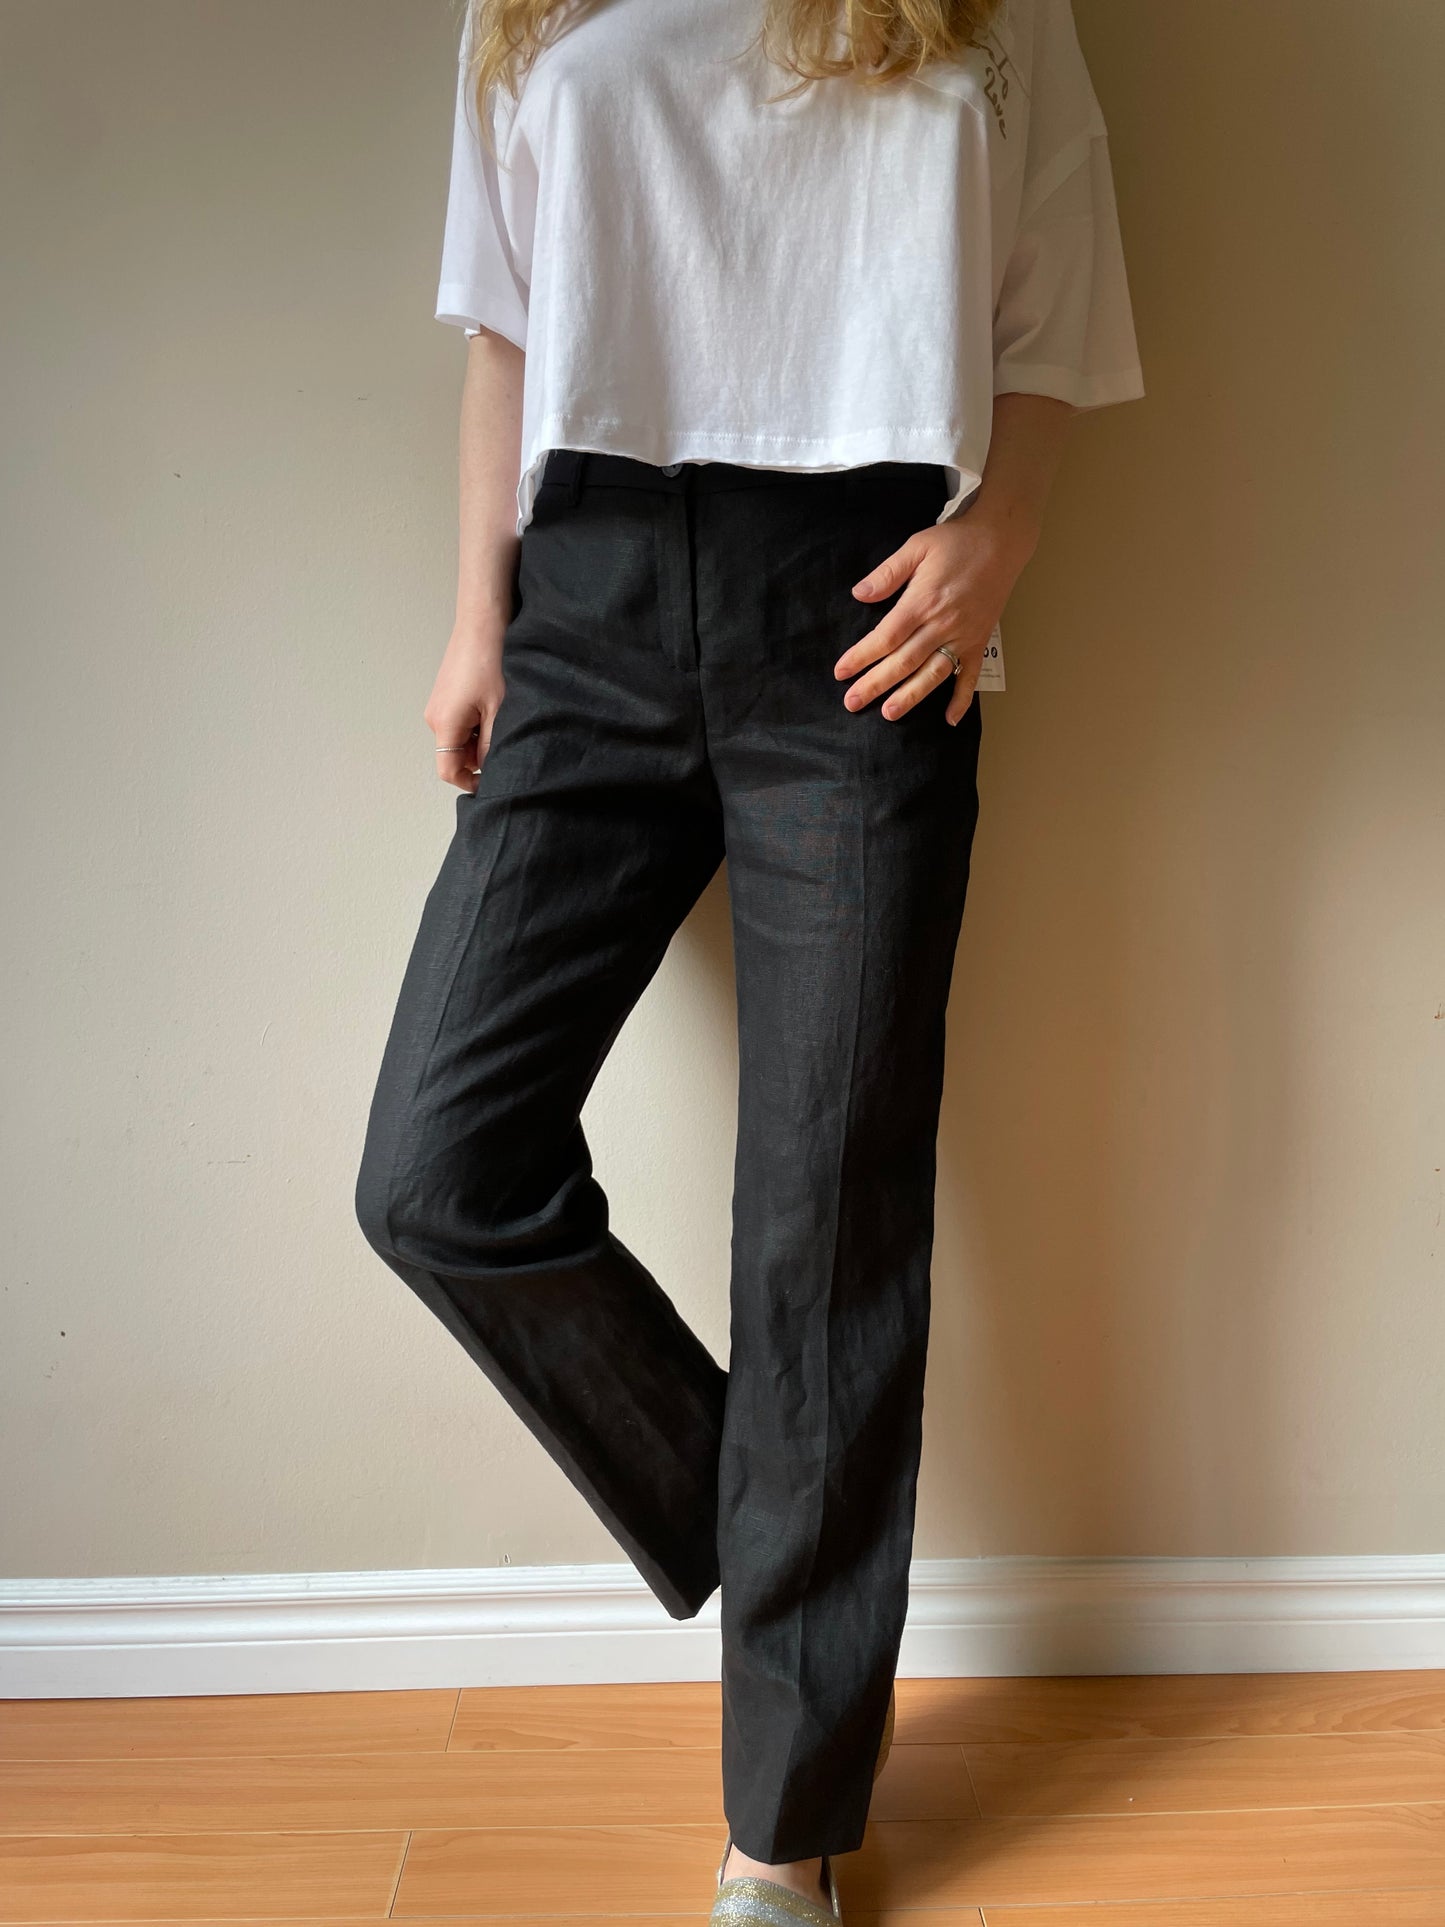 Jones New York Black 100% Linen Pants NWT - Size 4 Petite